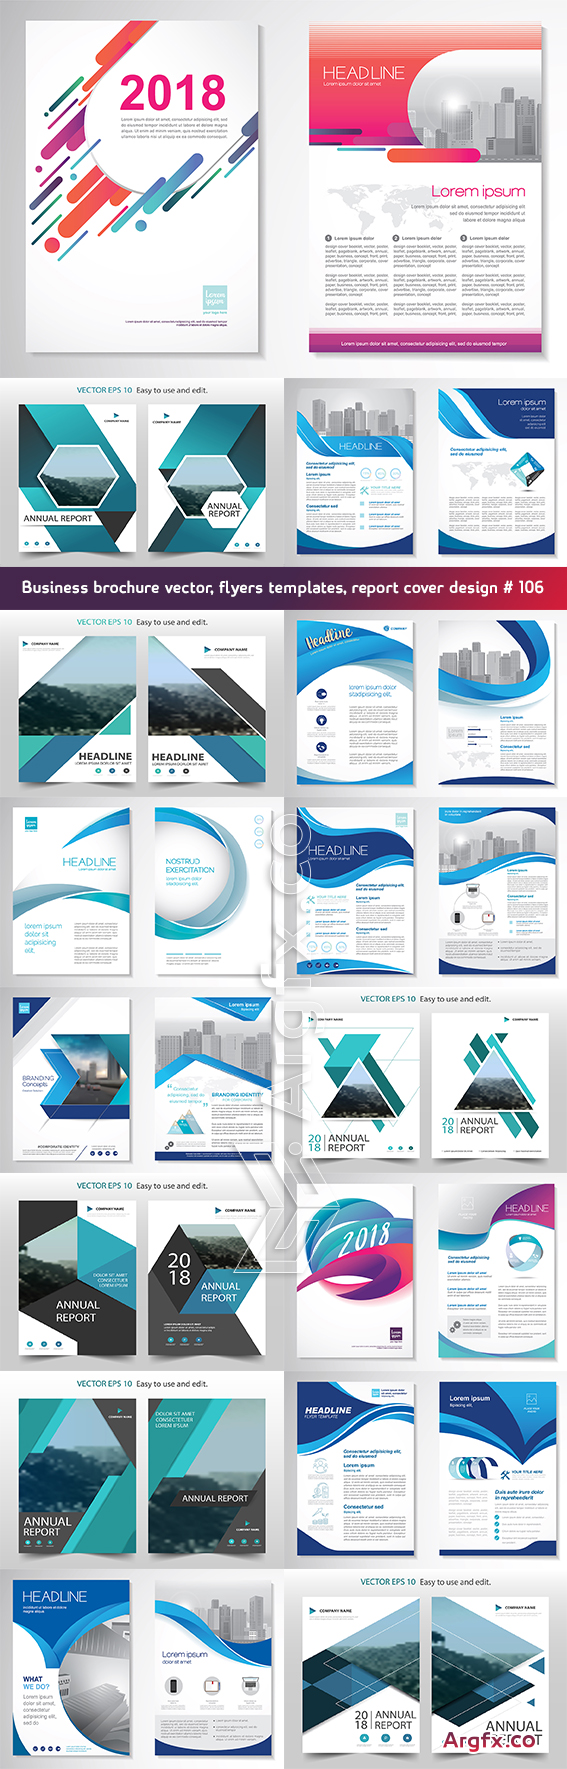  Business brochure vector, flyers templates, report cover design # 106